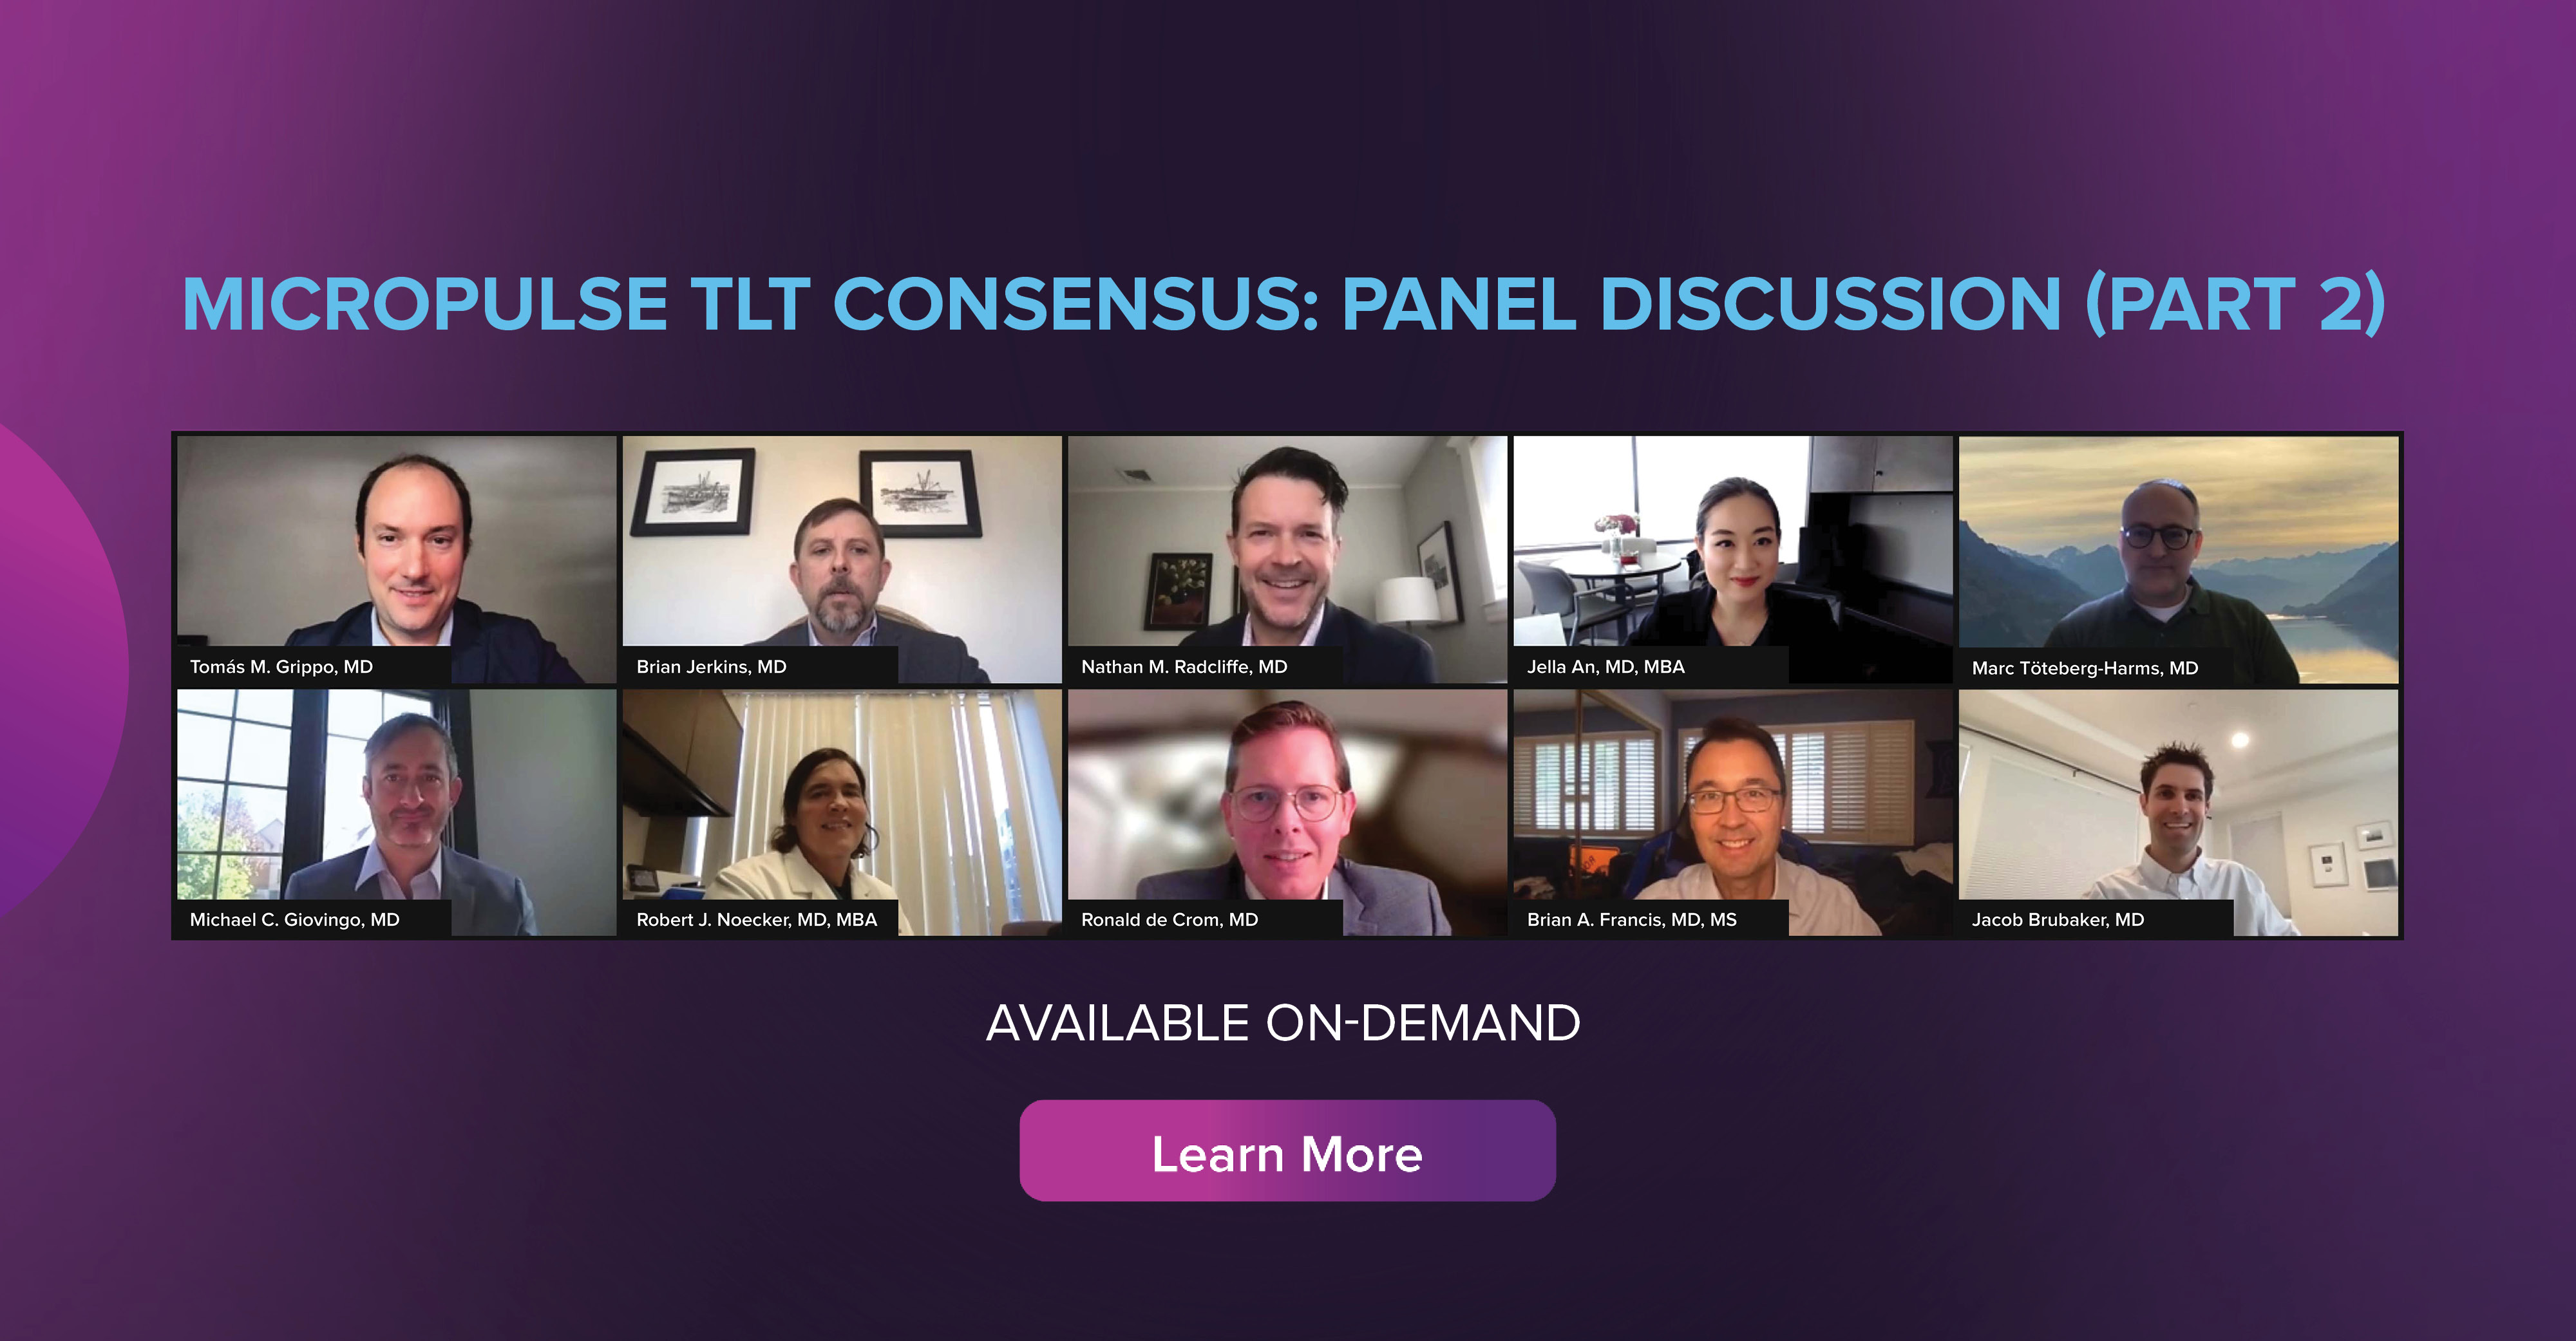 MicroPulse TLT Consensus: An International Expert Panel Discussion